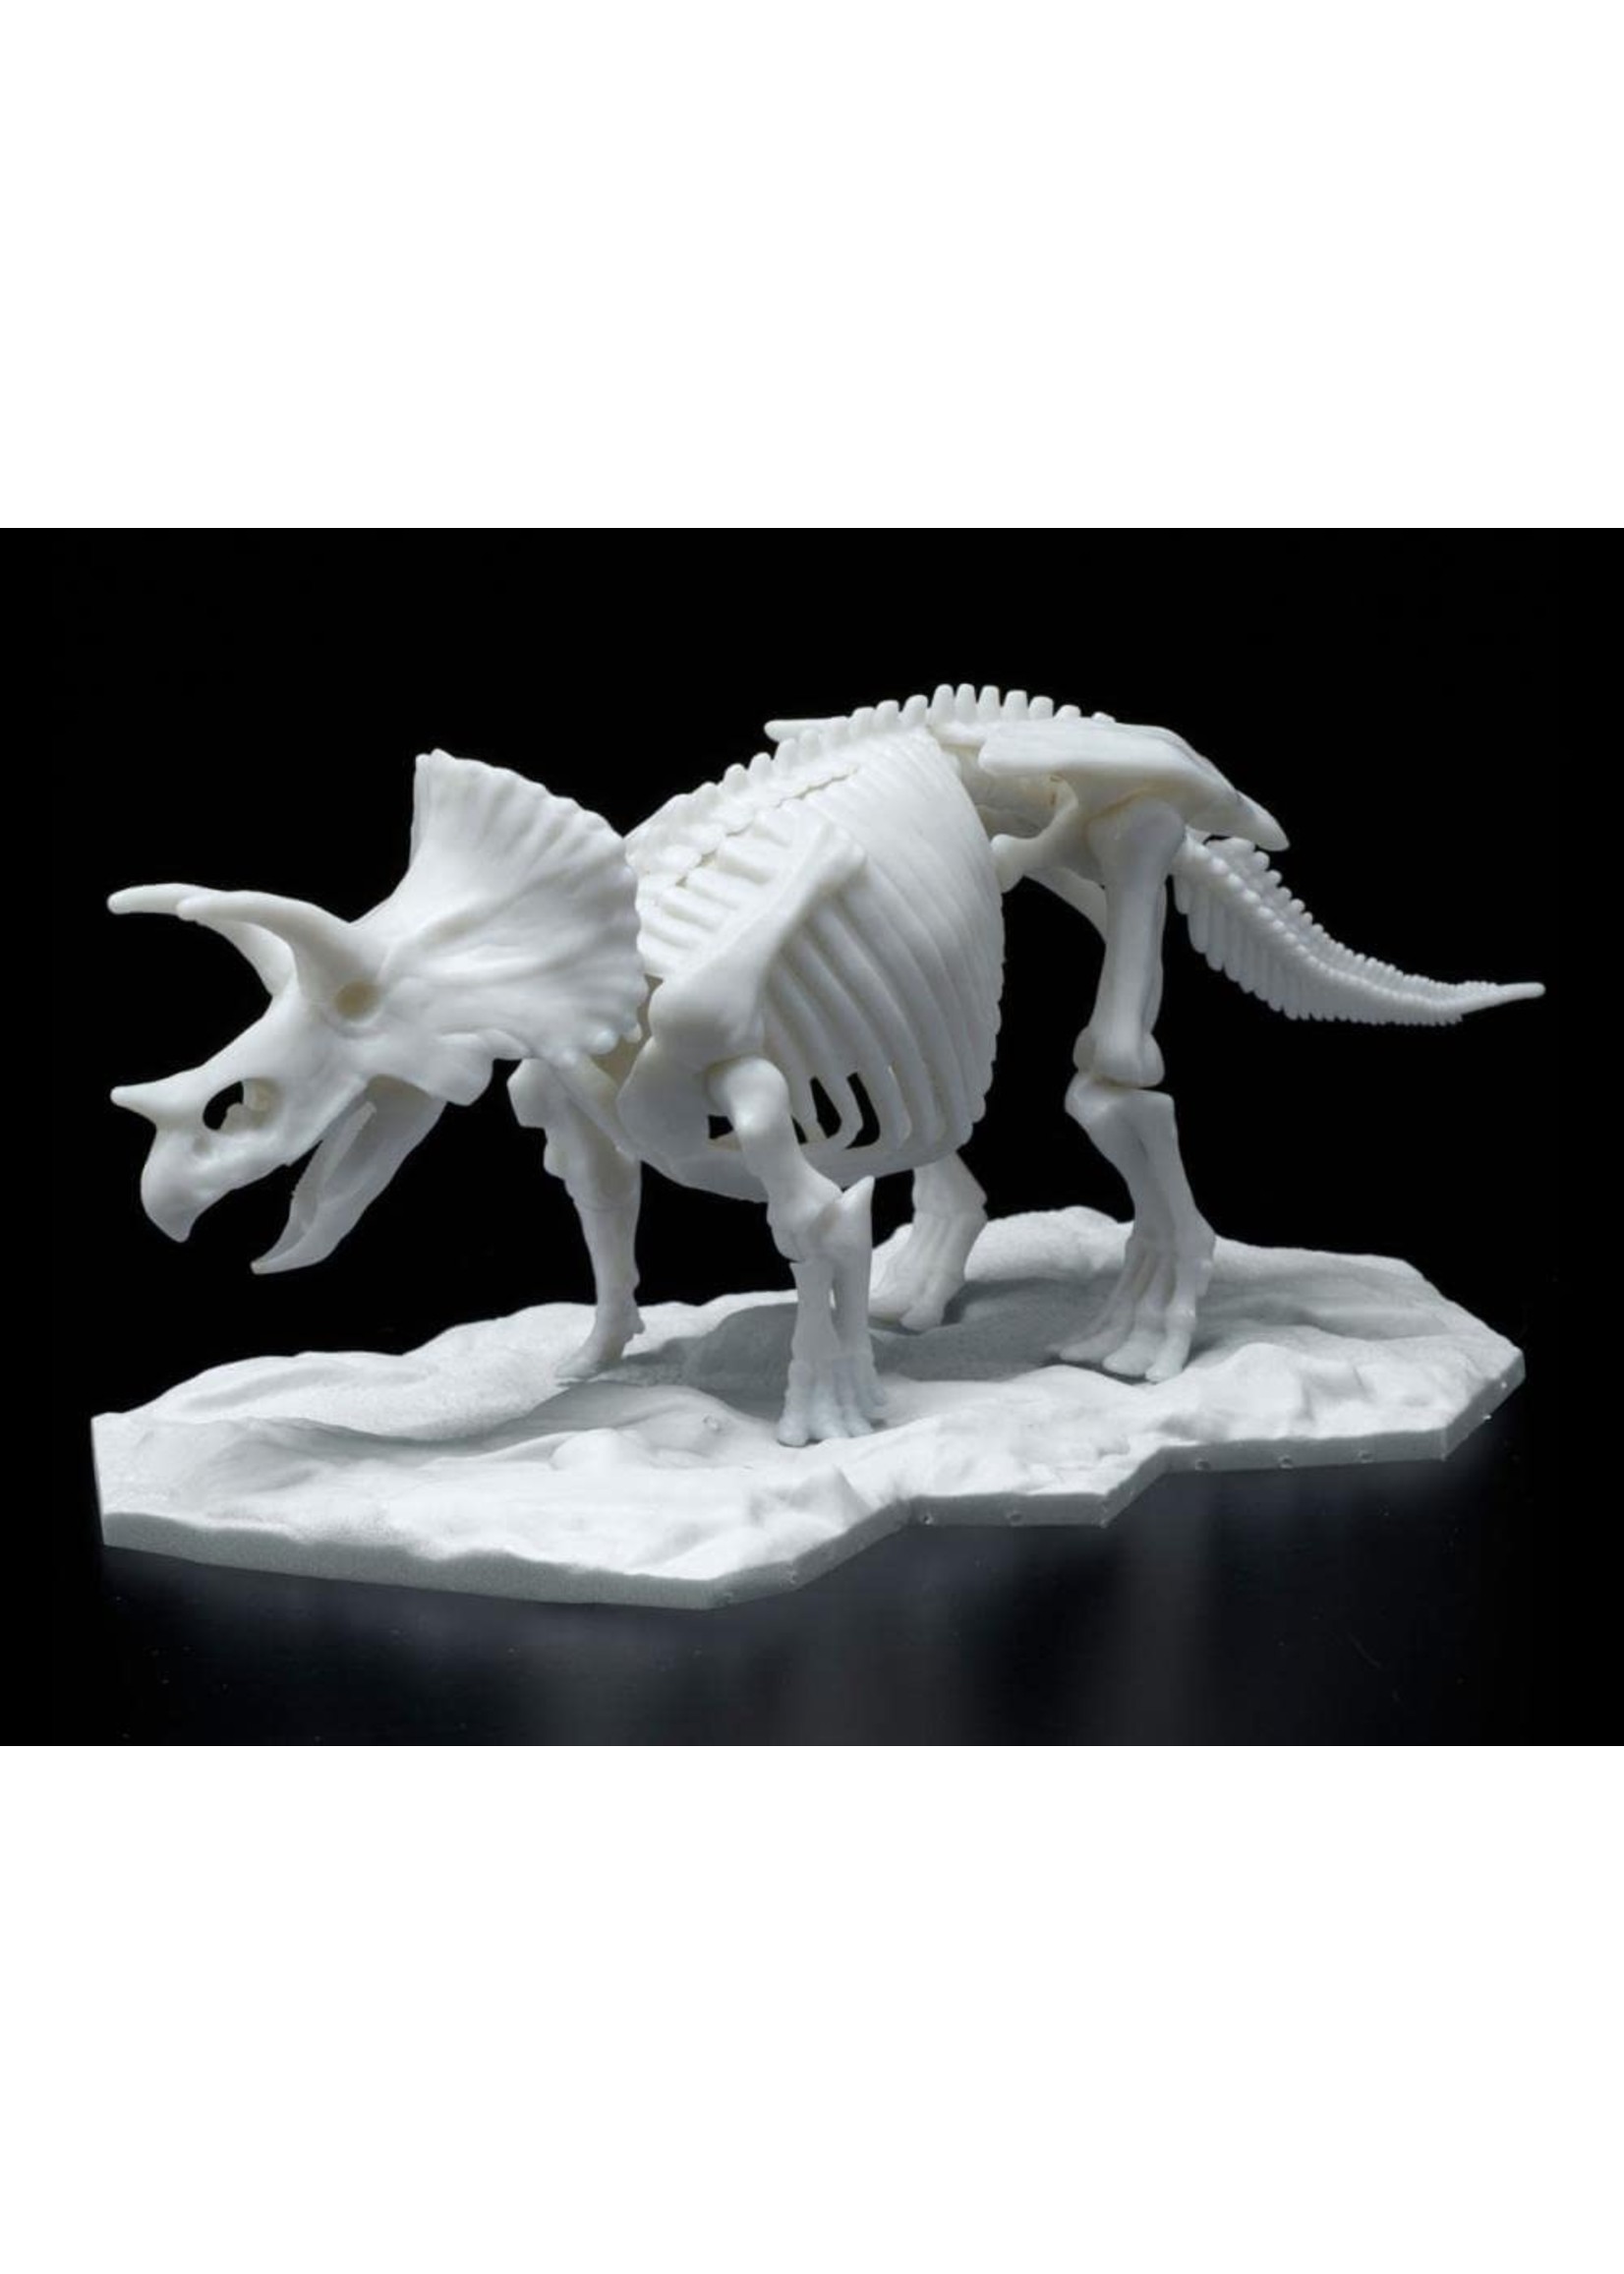 5D Diamond Painting Kits Dinosaur Embroidery Triceratops